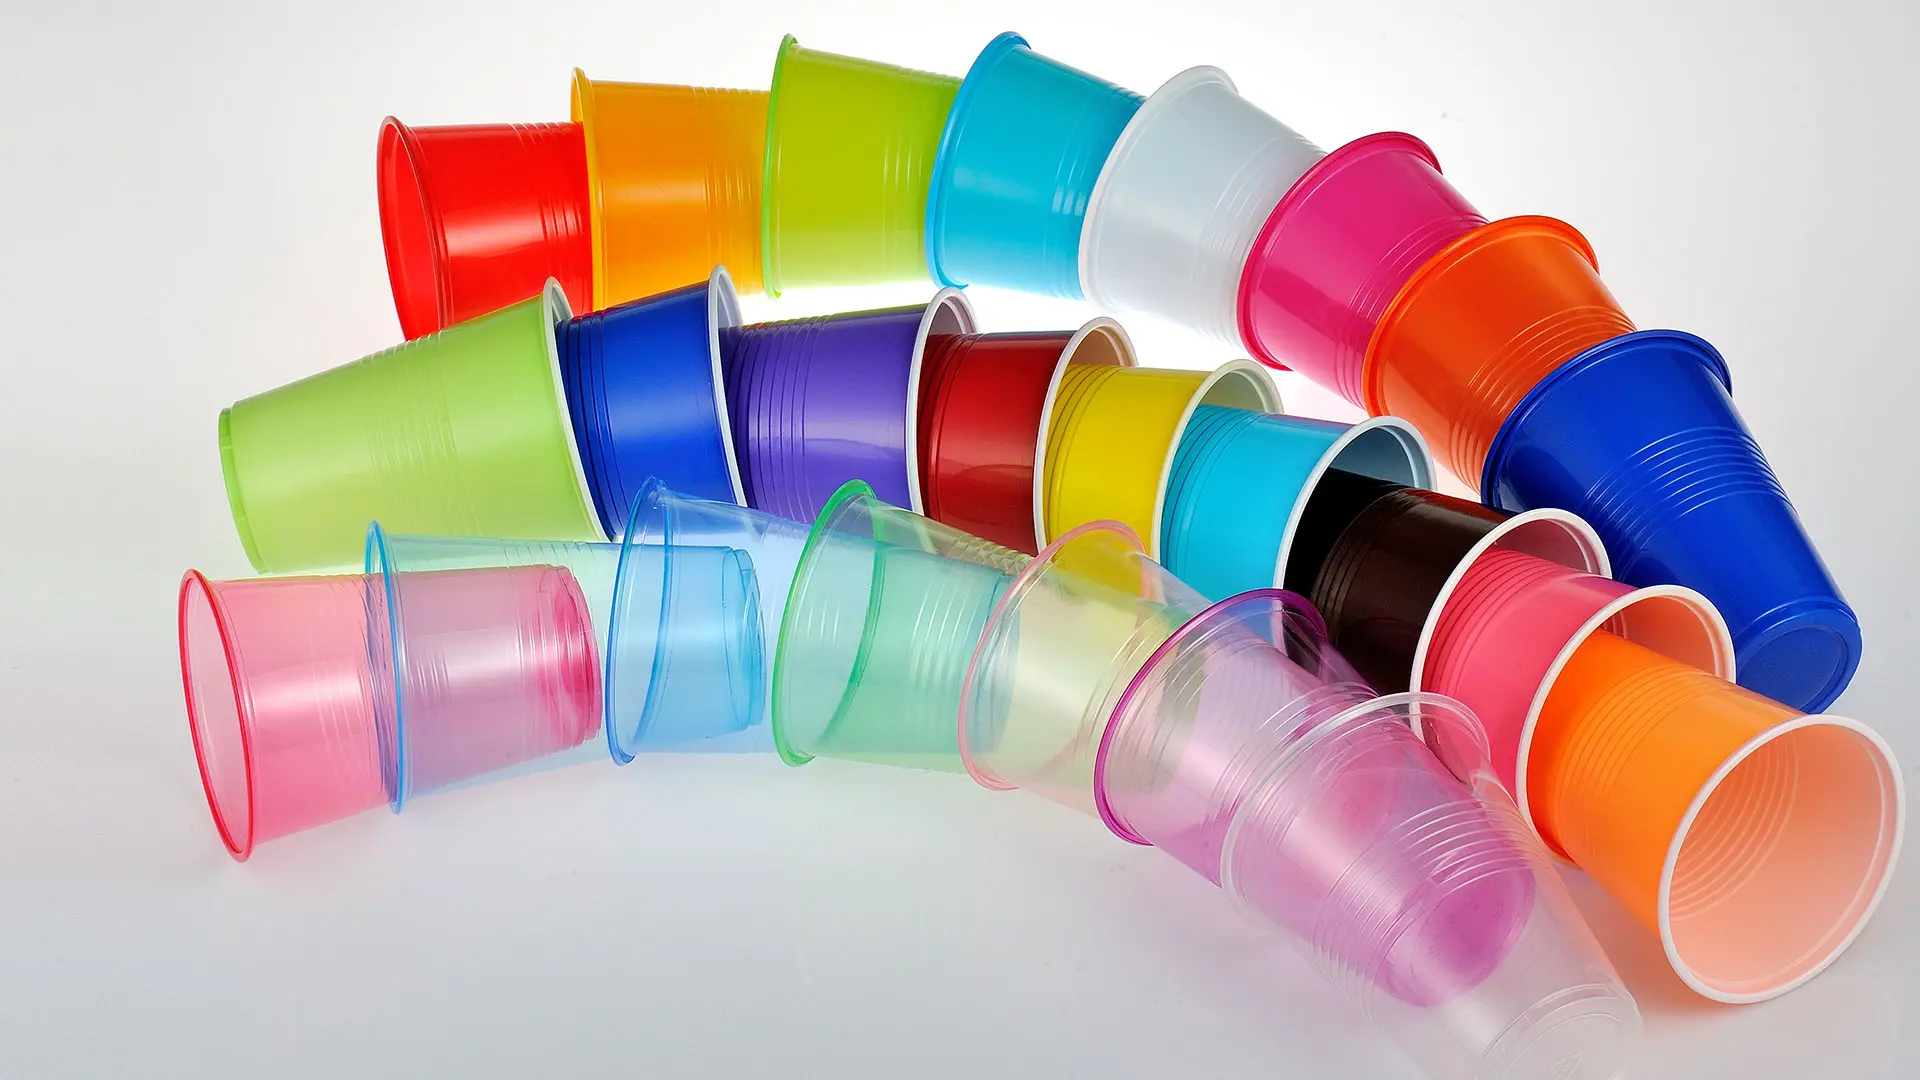 2oz Mini Red Plastic Shot Glasses / Solo Cup, 20 Per Bag - Kaijia Plastics  Co., Ltd